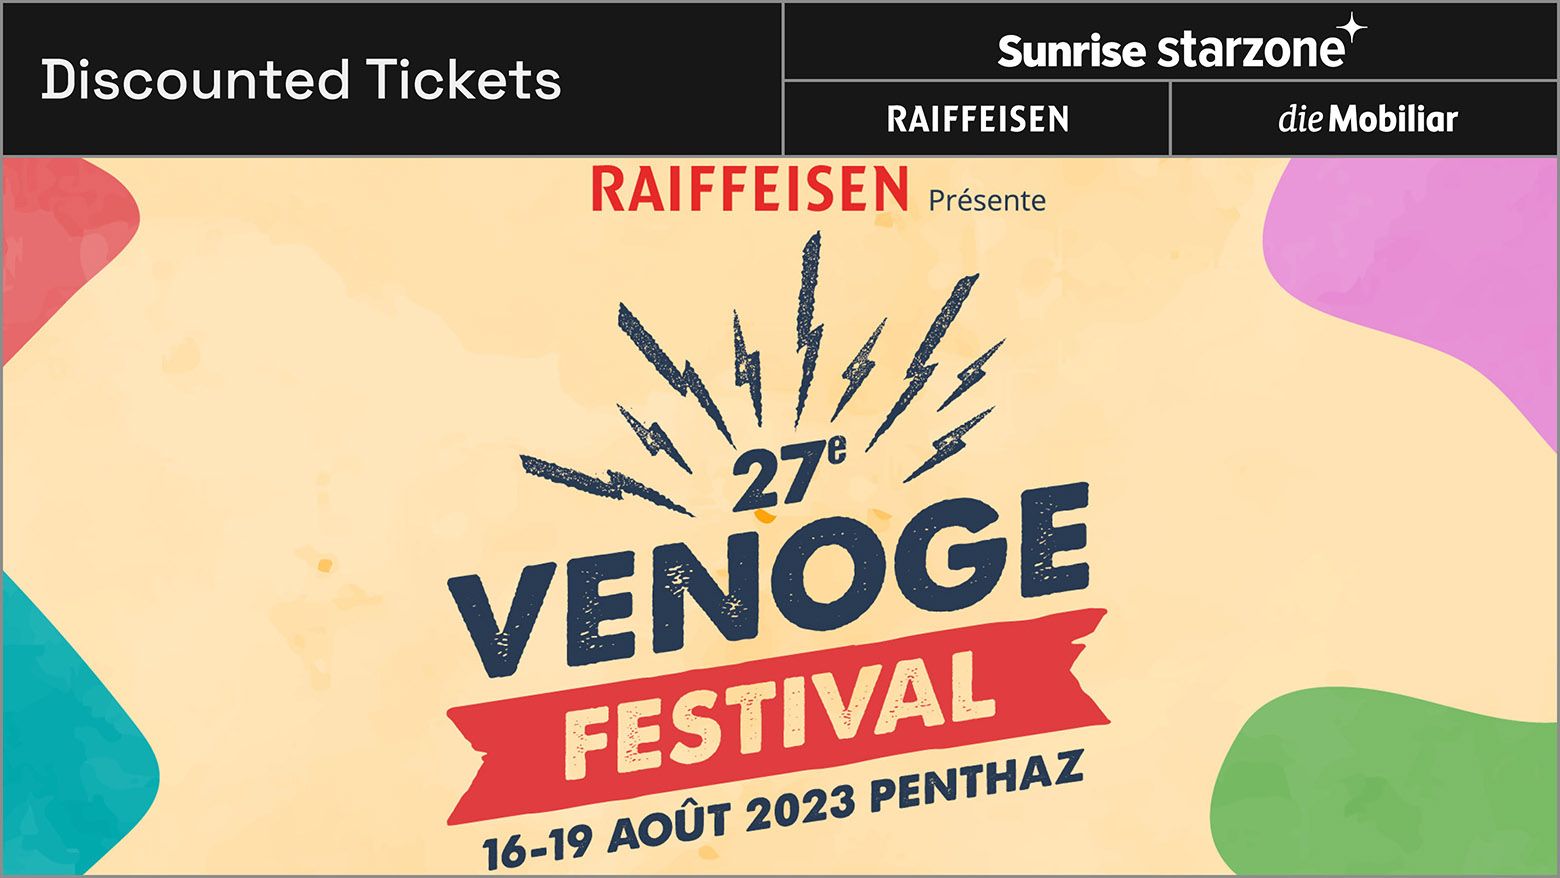 Venoge Festival billets - 25% de rabais | MemberPlus Raiffeisen